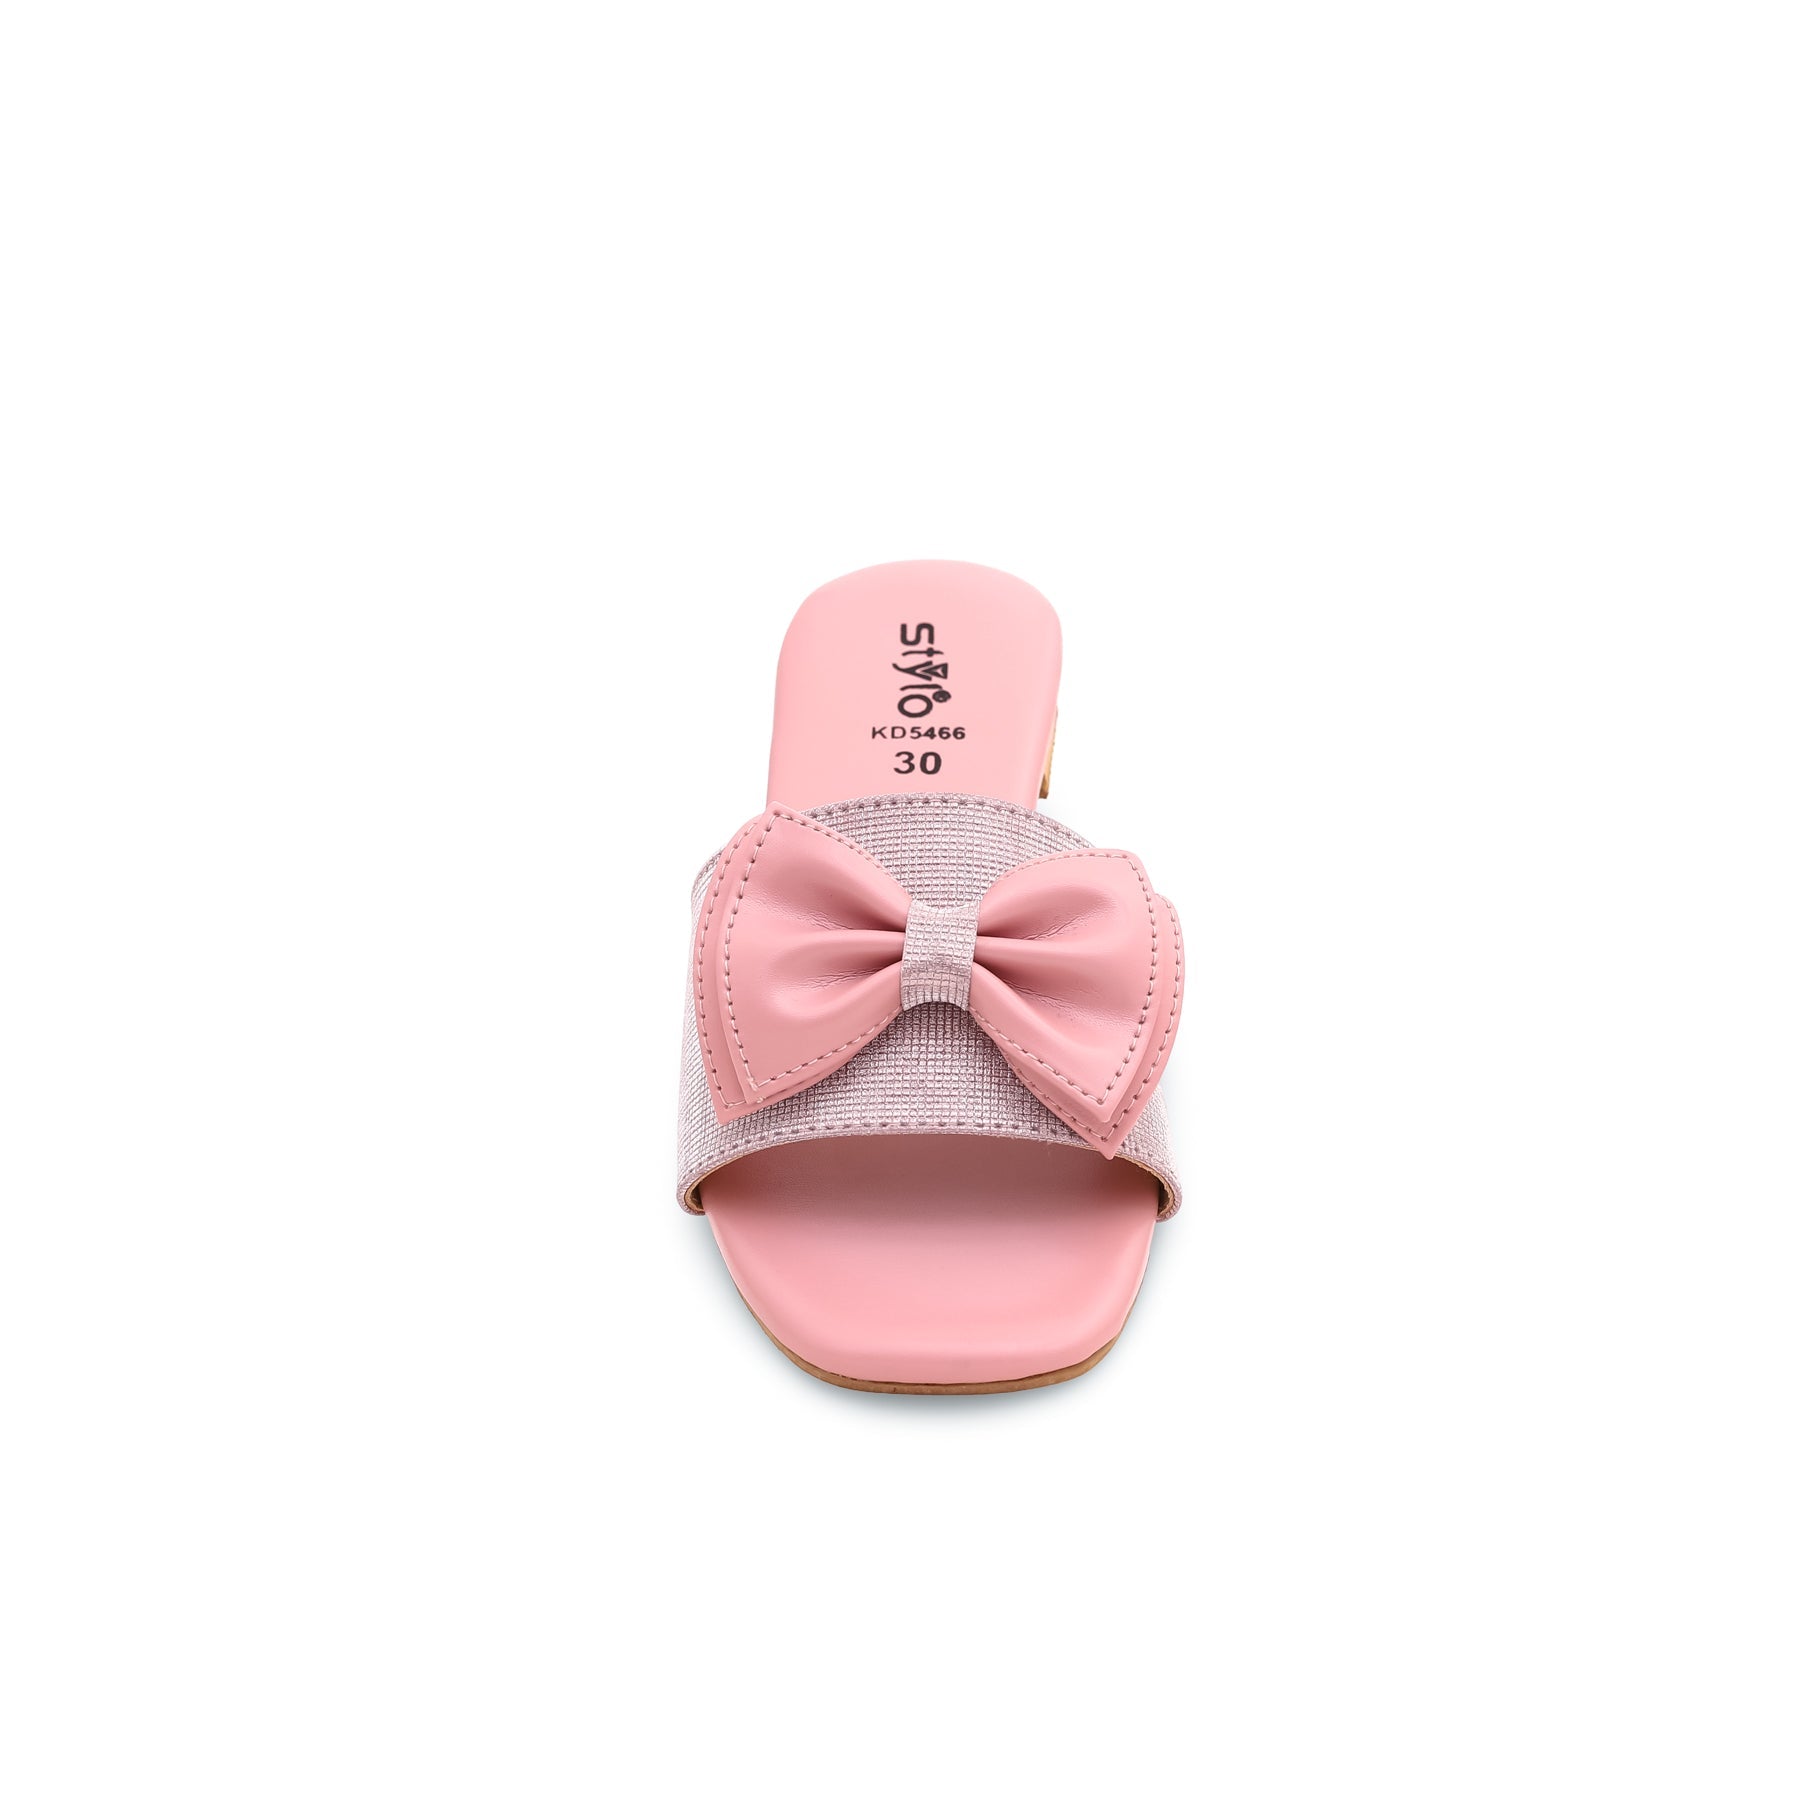 Girls Pink Casual Slipper KD5466